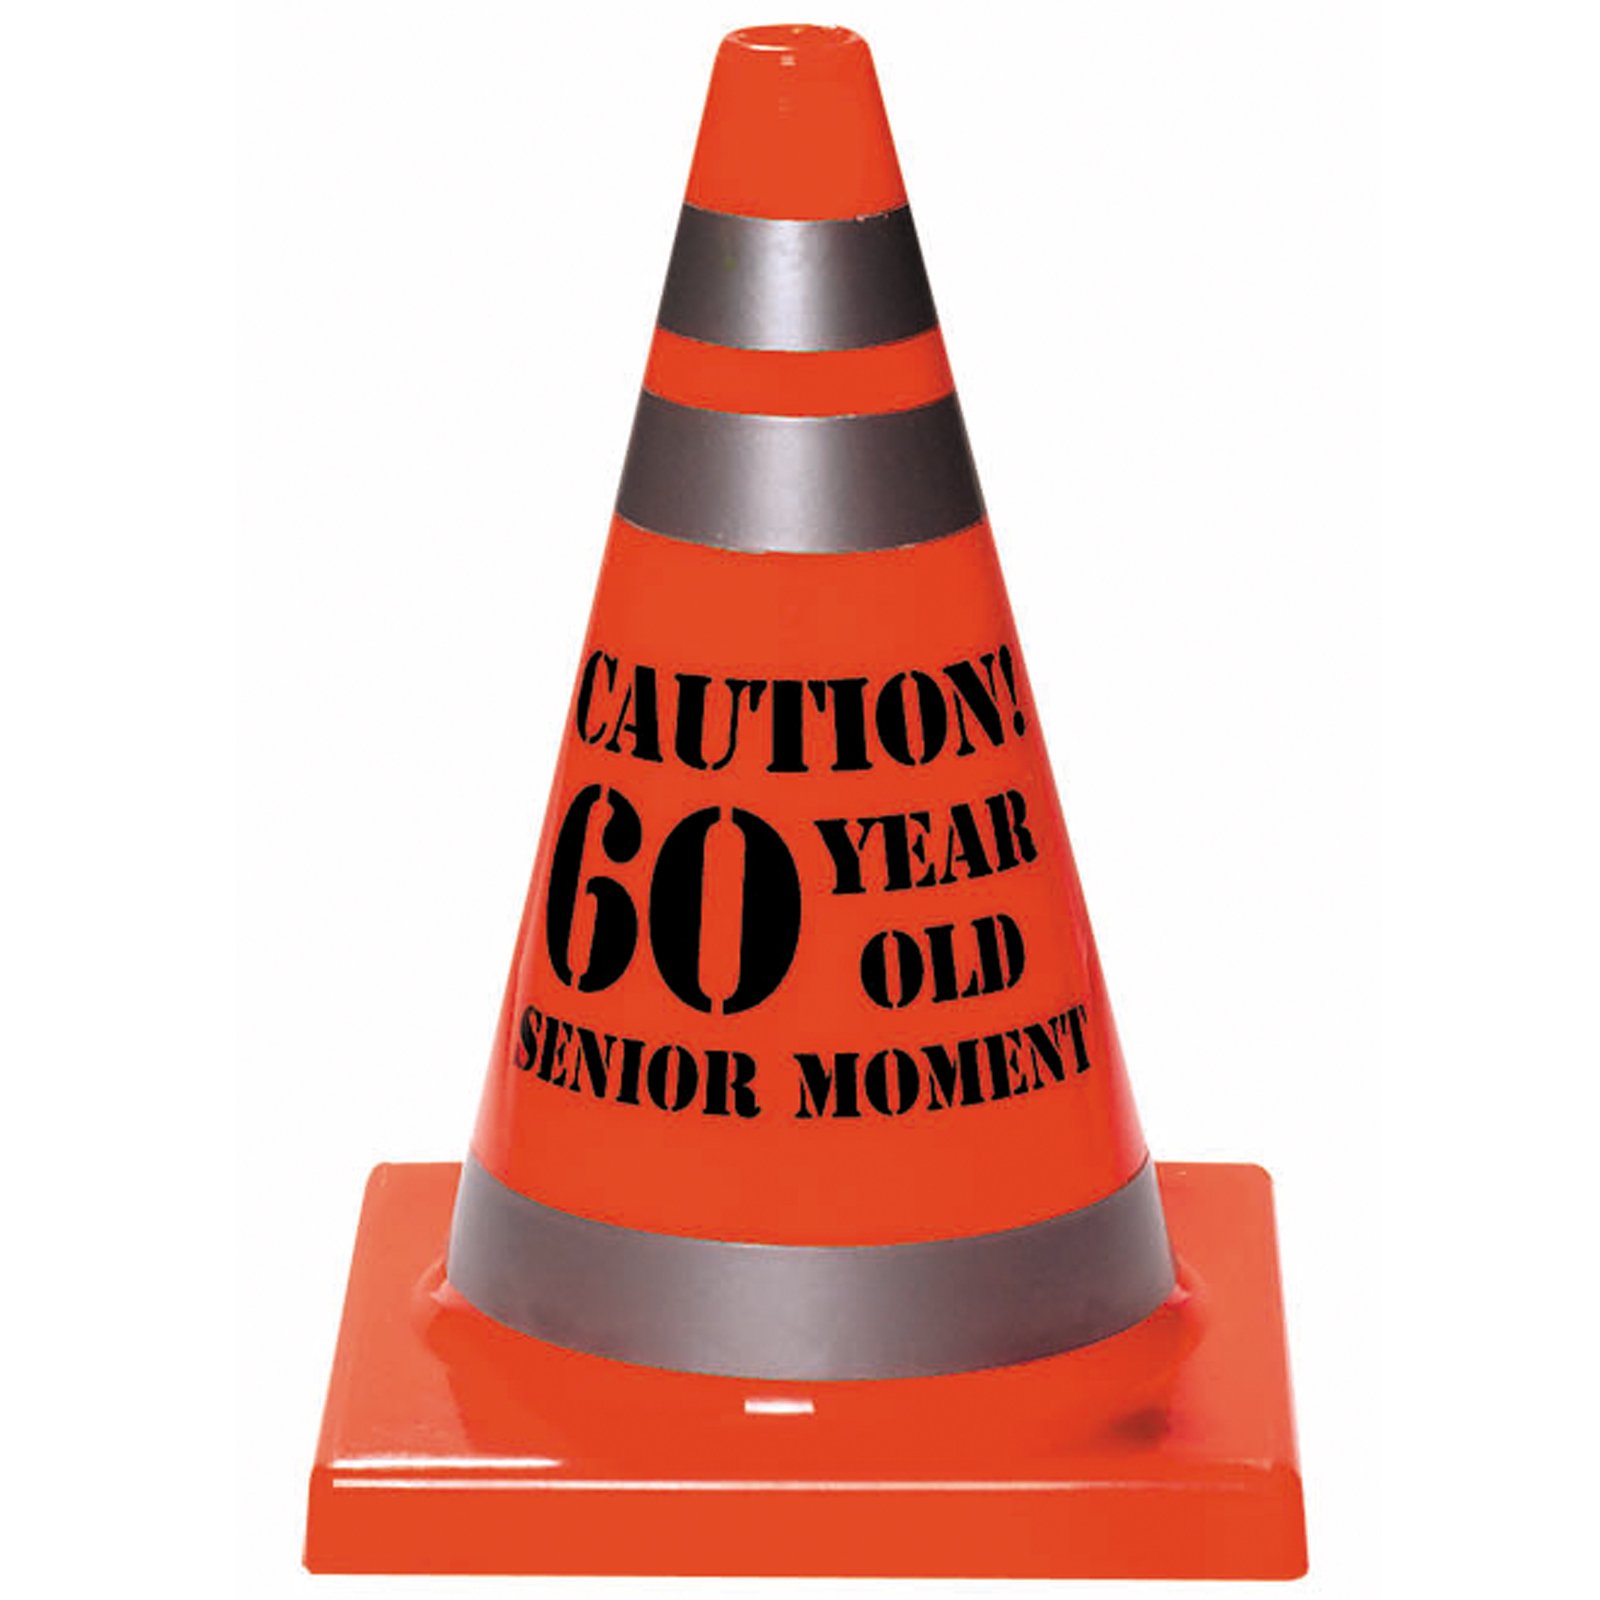 Senior Moment "60" Construction Cone